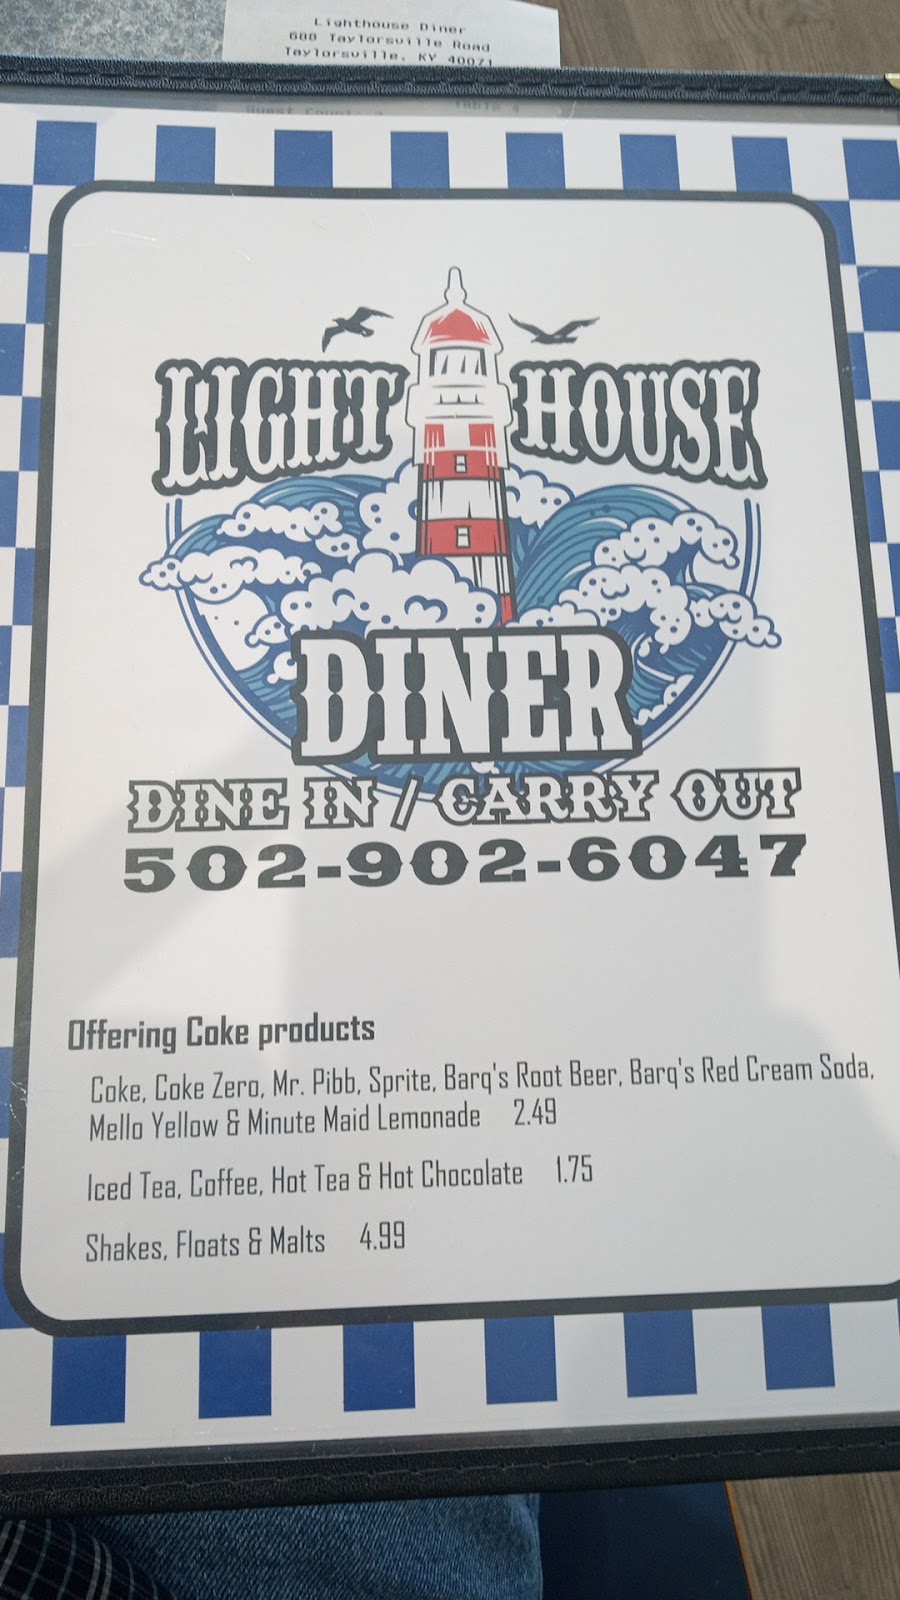 The lighthouse diner | restaurant | 688 Taylorsville Rd, Taylorsville, KY 40071, USA | 5029026047 OR +1 502-902-6047